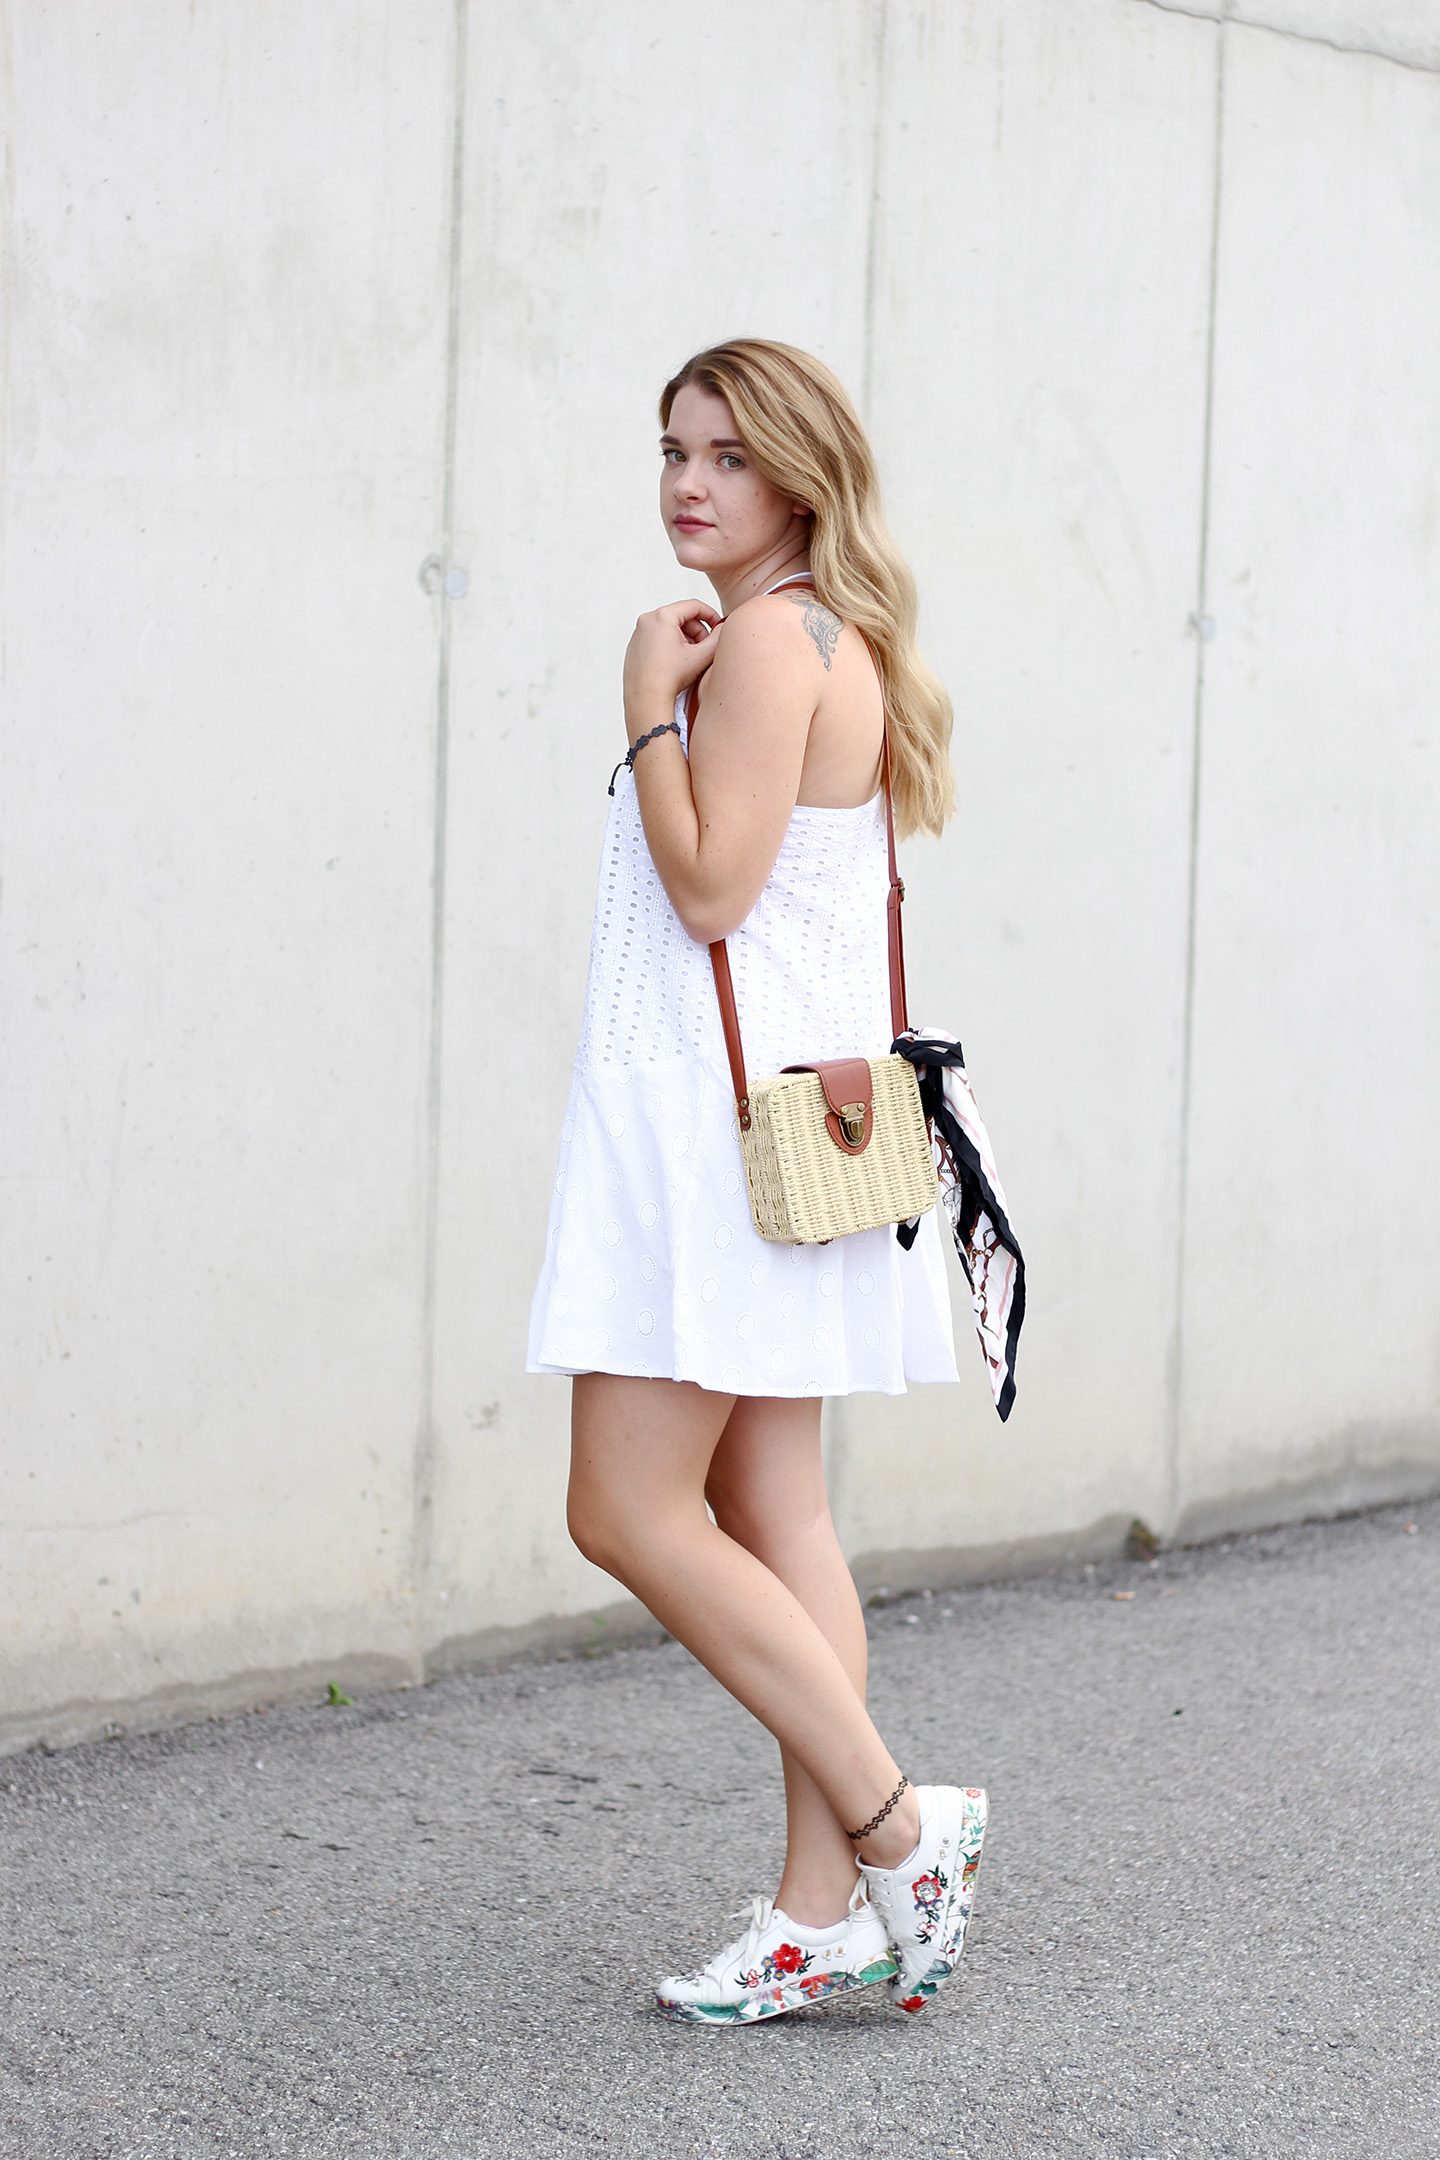 Sommerkleid in weiß